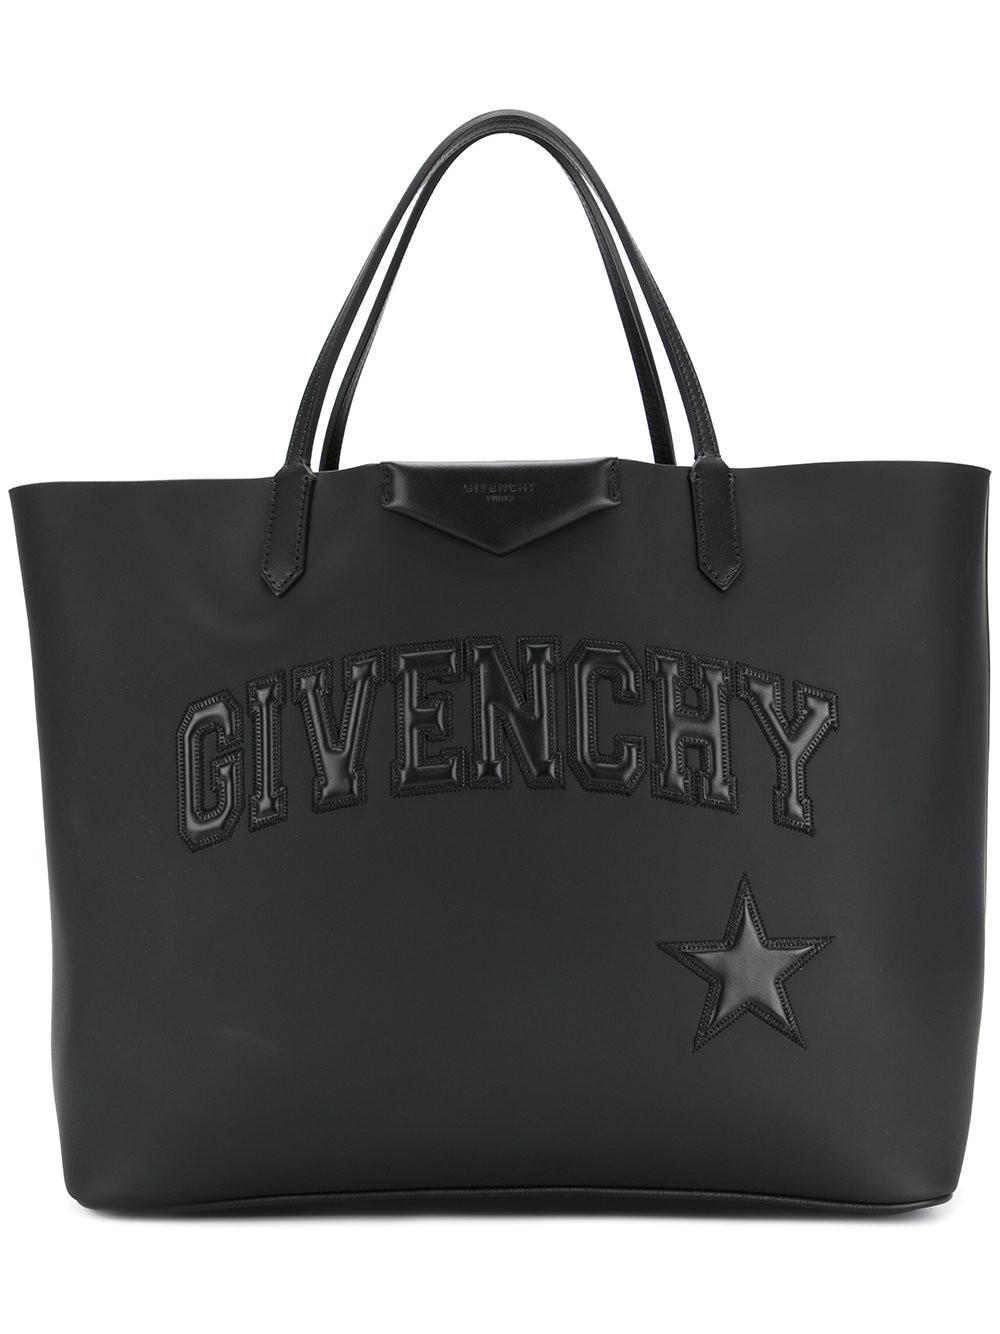 Lyst - Givenchy Large Antigona Shopper in Black